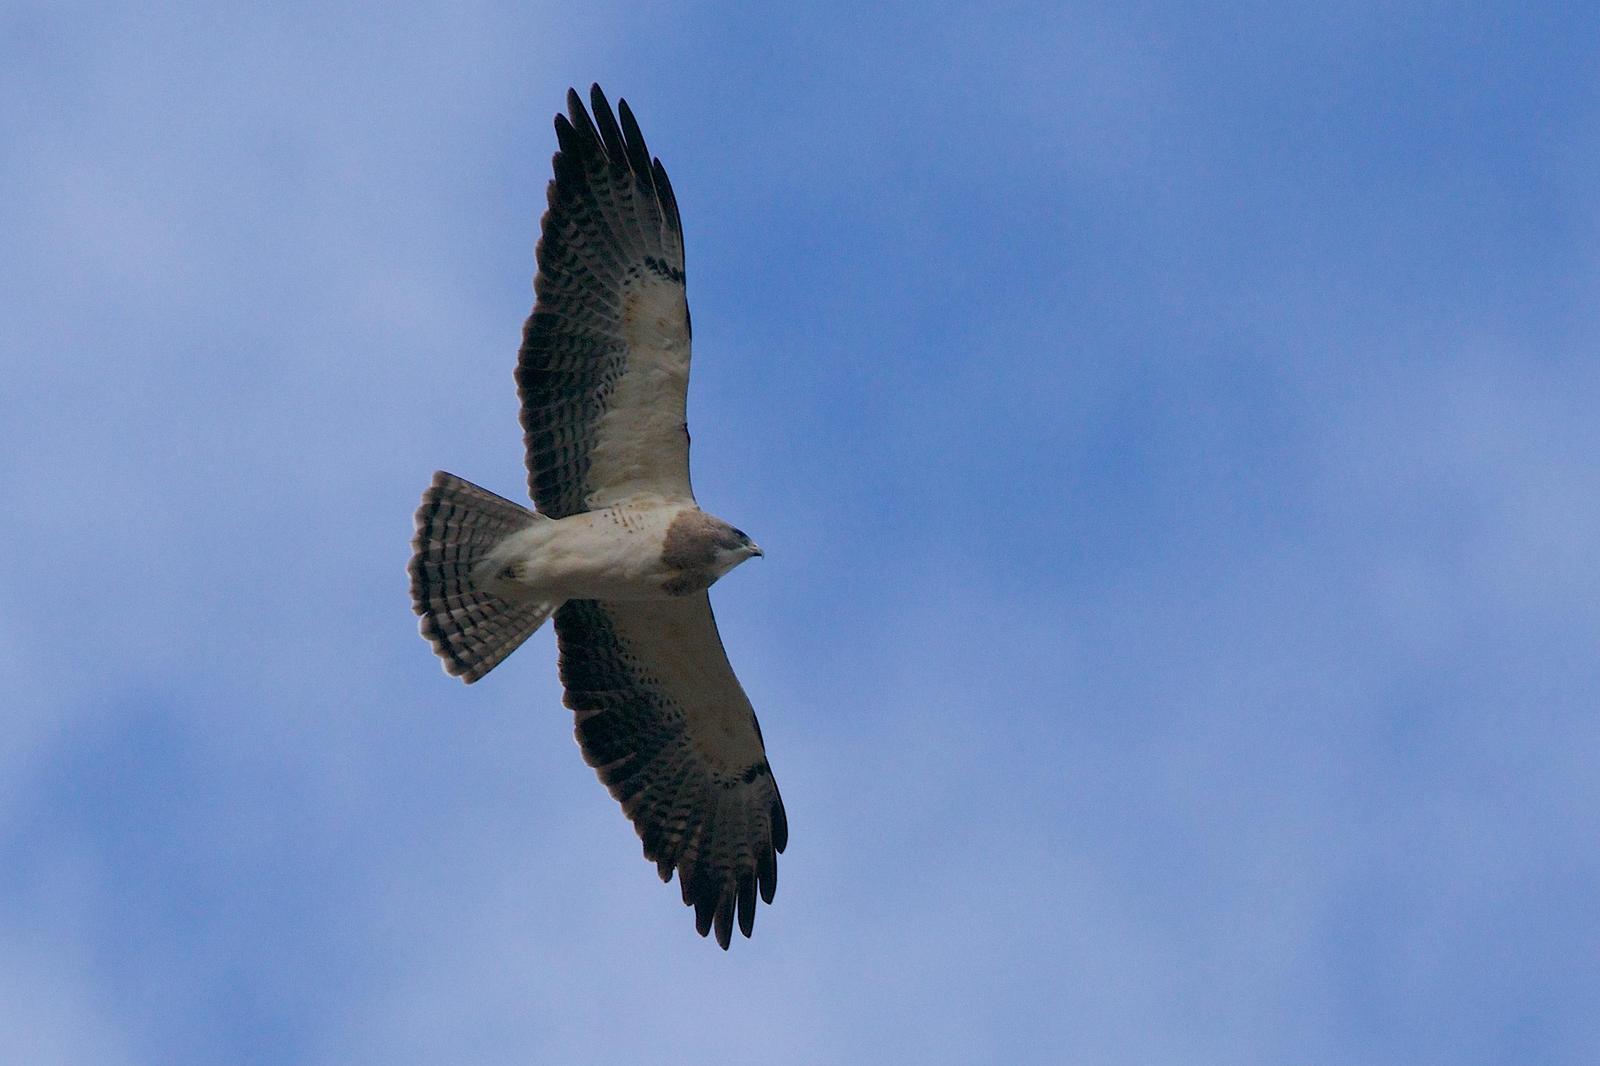 Swainson's Hawk Photo by Gerald Hoekstra